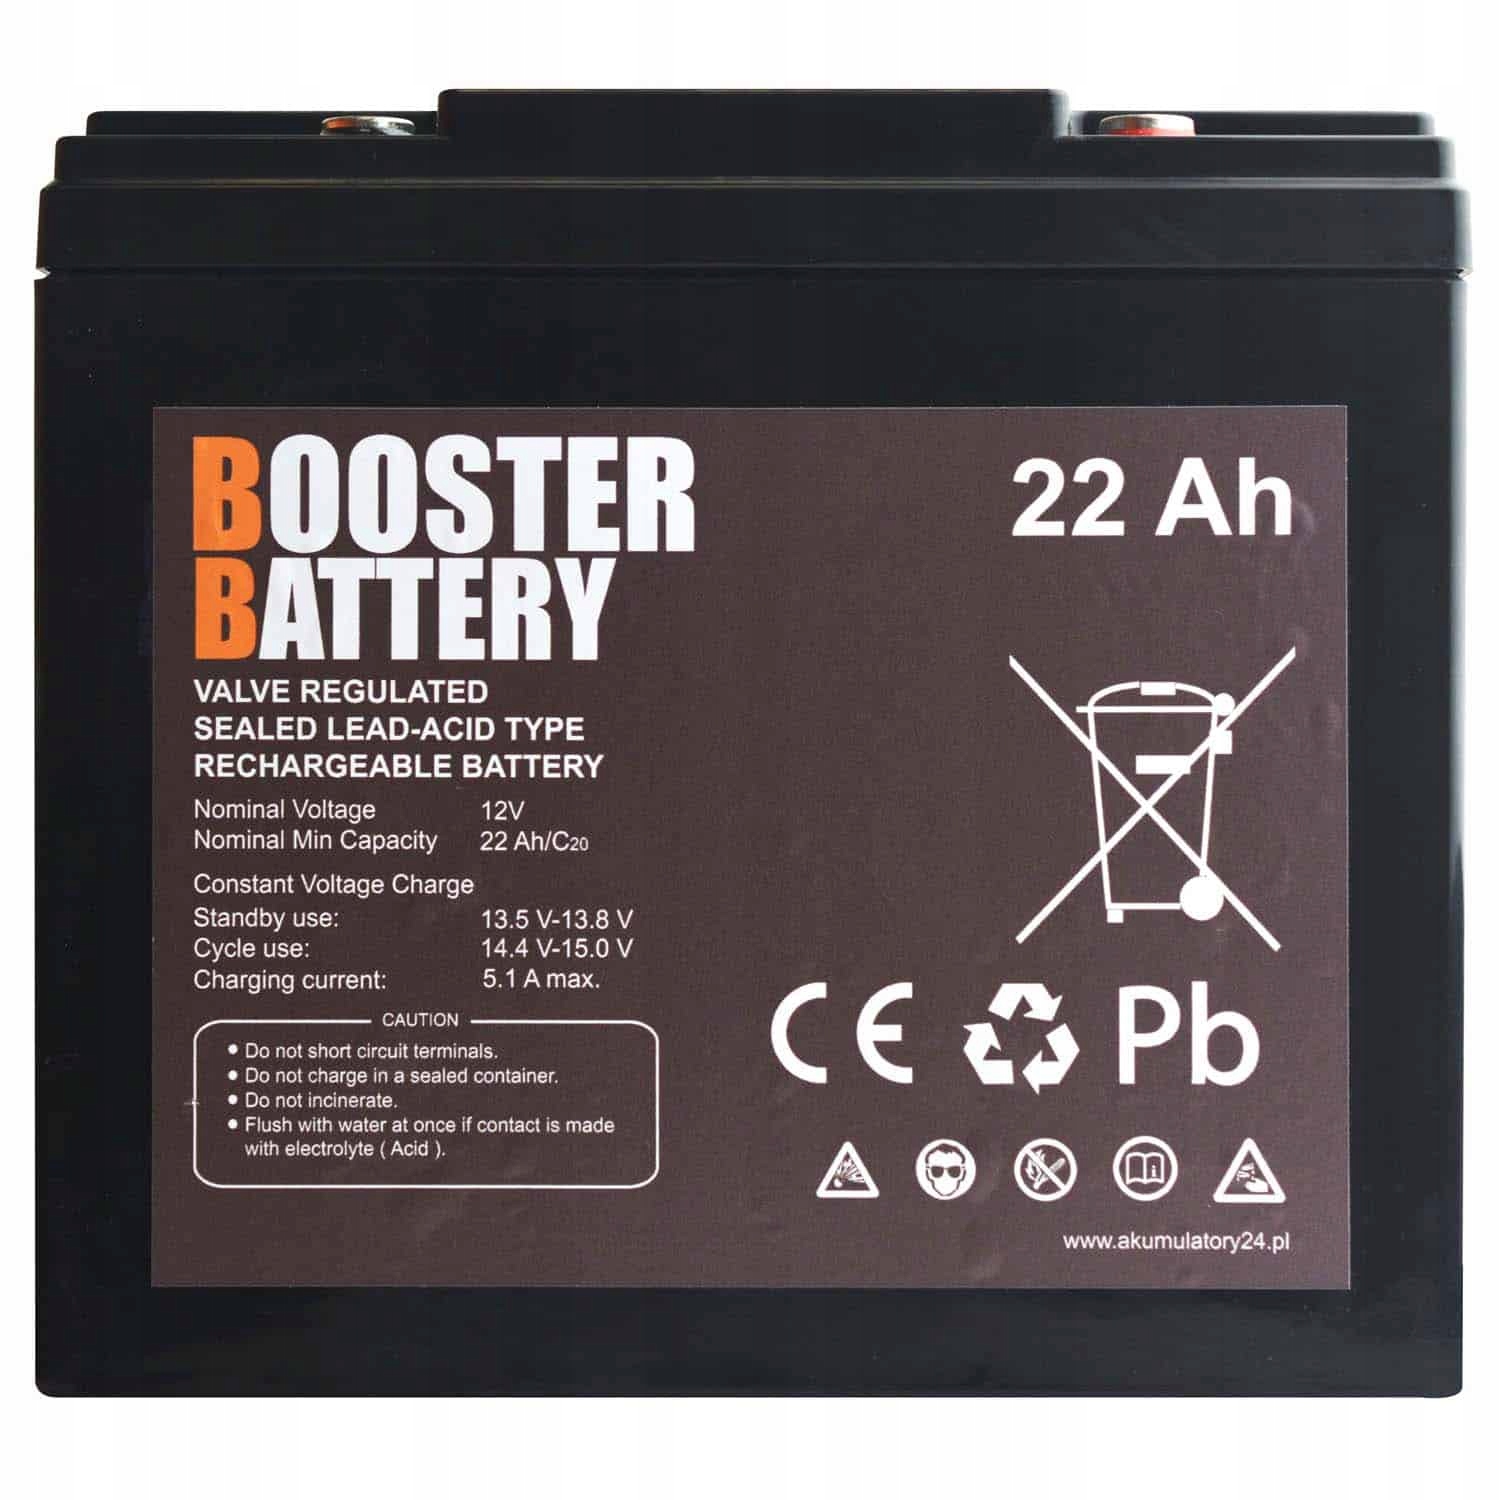 Akumulator AGM do Boostera 12V 22Ah 2200A LEMANIA P62500 za 435 zł